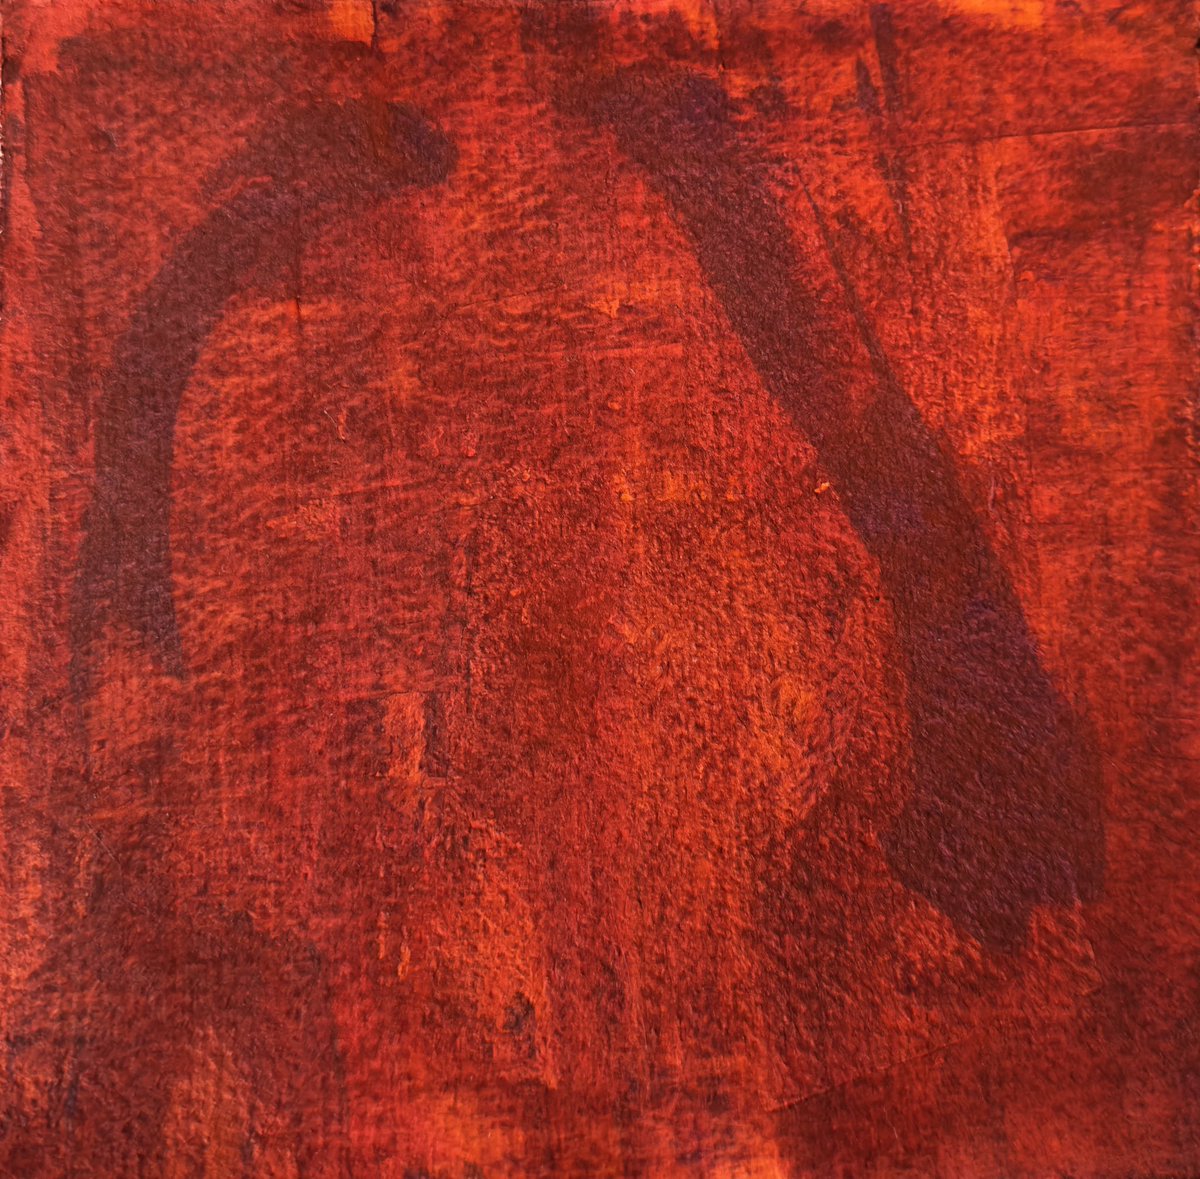 ‘Swept’
Acrylic on cotton rag
5.14” x 6.5”

#art #painting #abstractpainting #abstractexpressionism #abstractartist #abstractartwork #artist #painter #artwork #artoftheday #modernart #contemporaryart #acrylicpainting #acrylicart #cottonrag #contemporaryabstractpainting